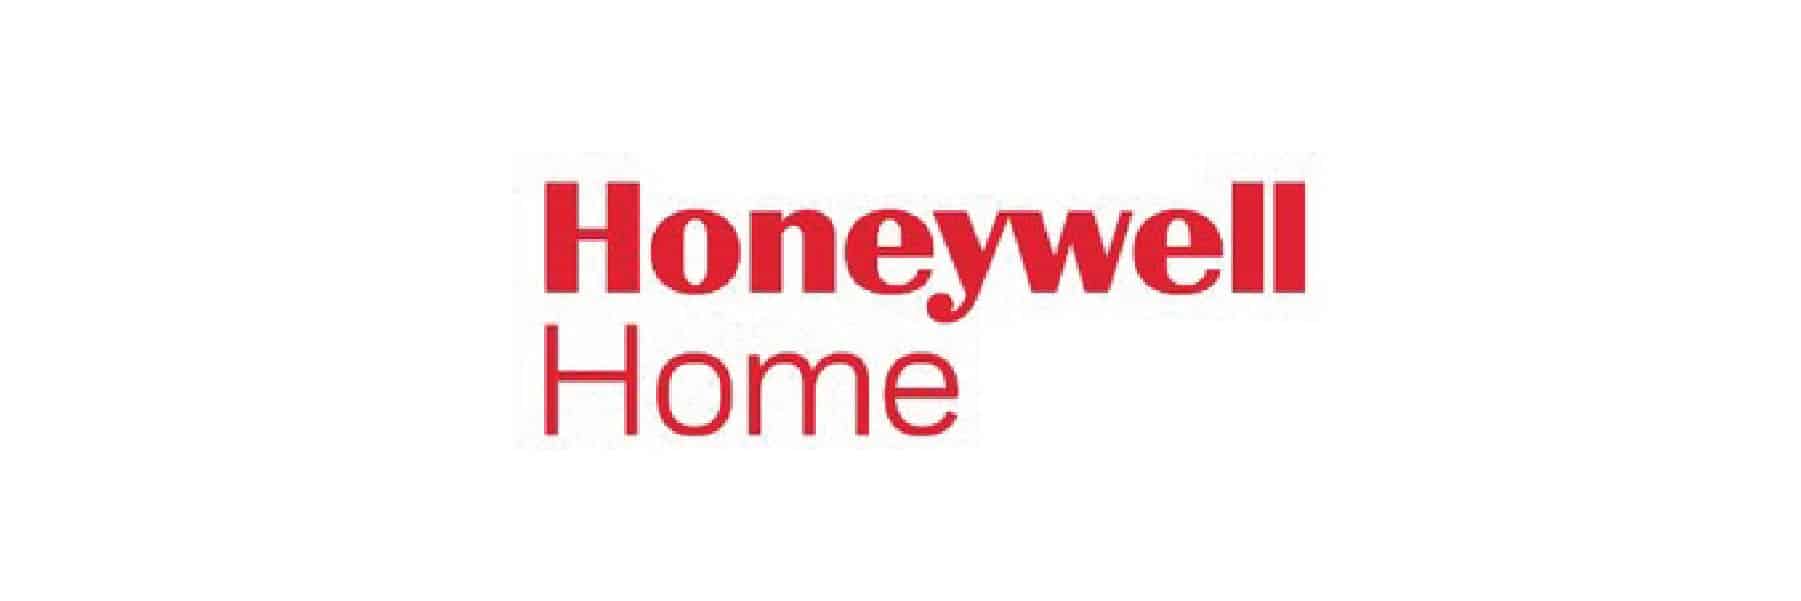 honeywell home